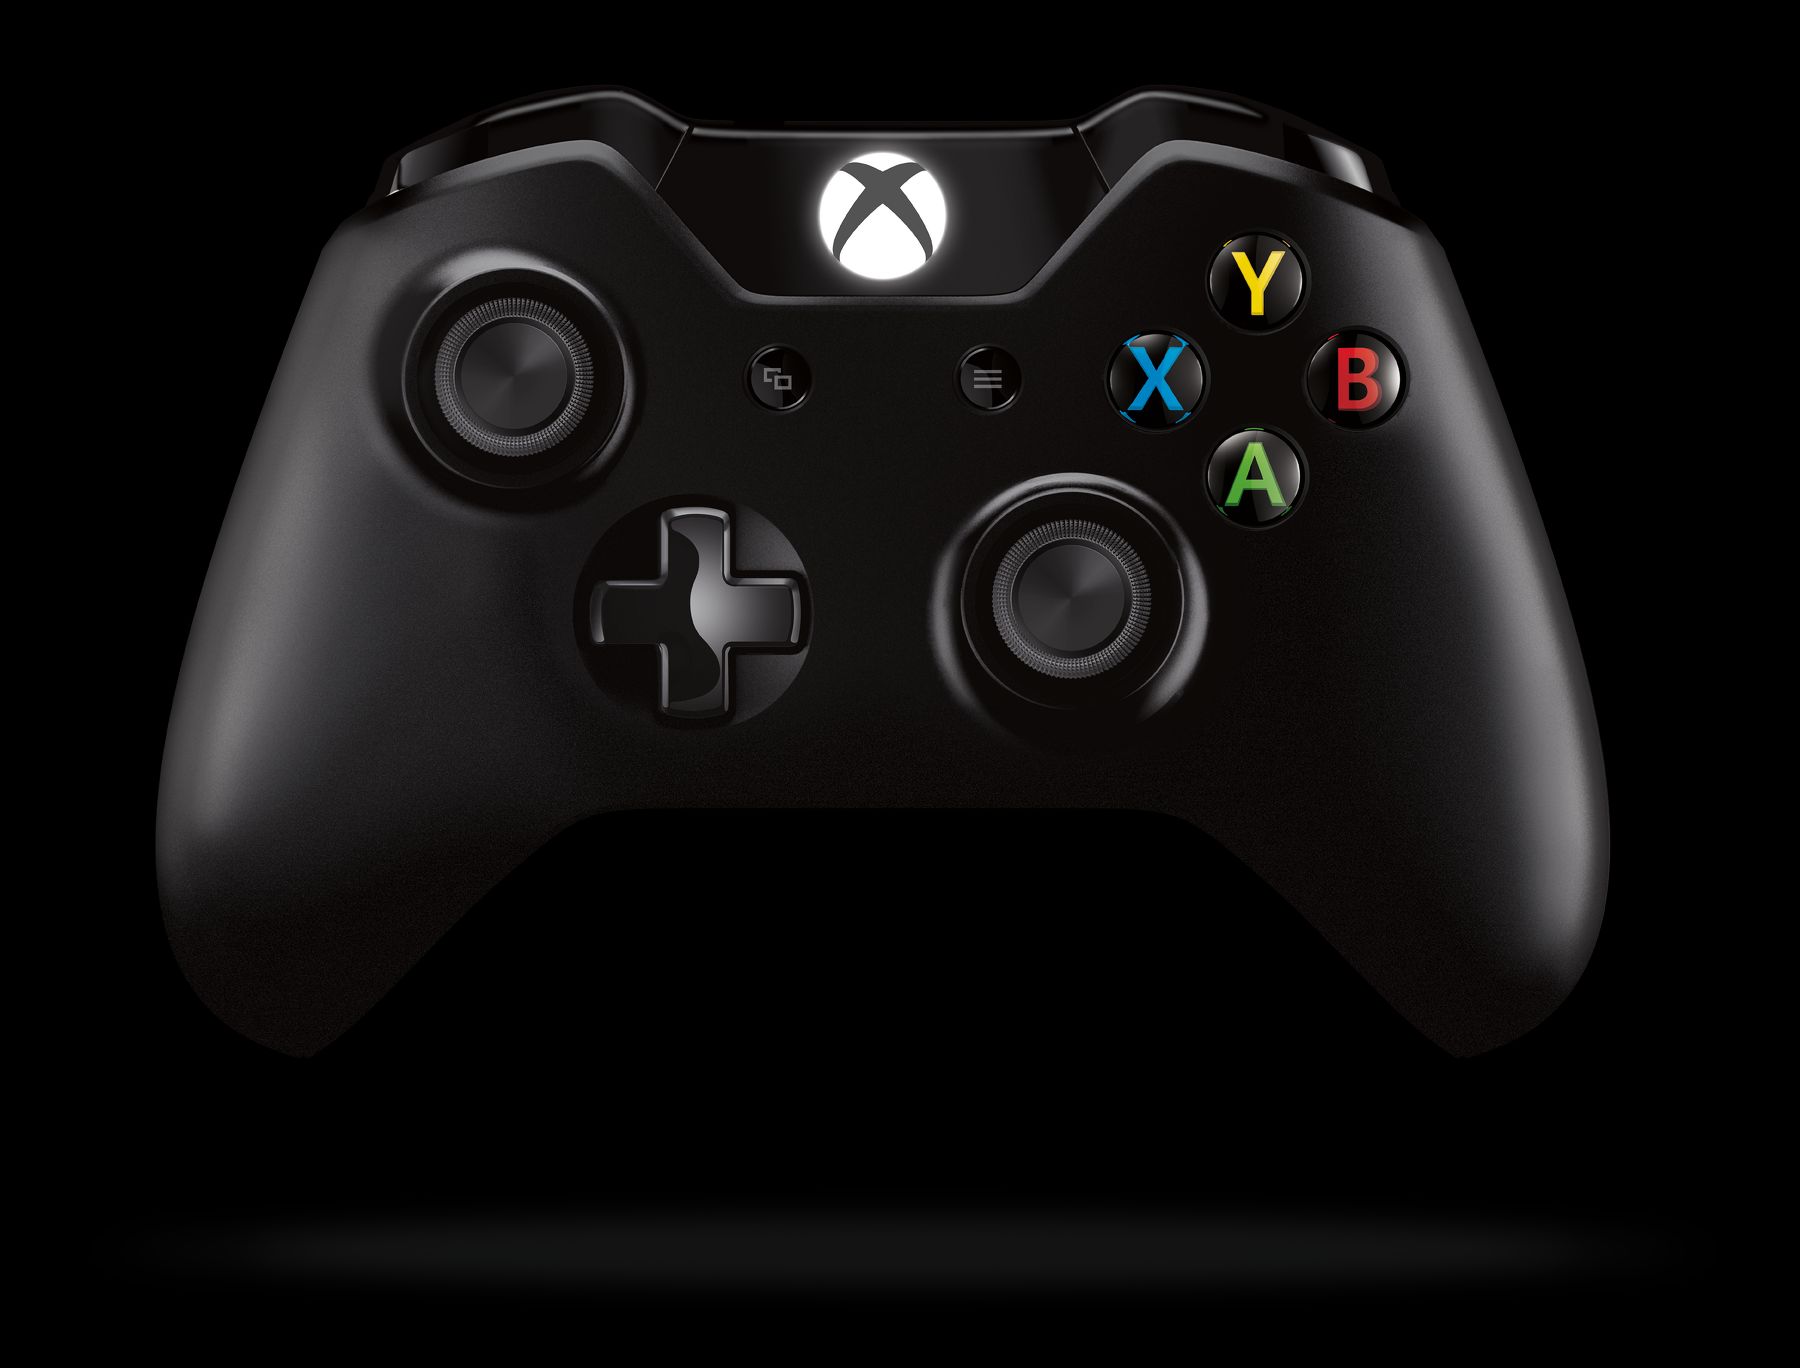 Ovladač konzole Xbox One v detailech 82040